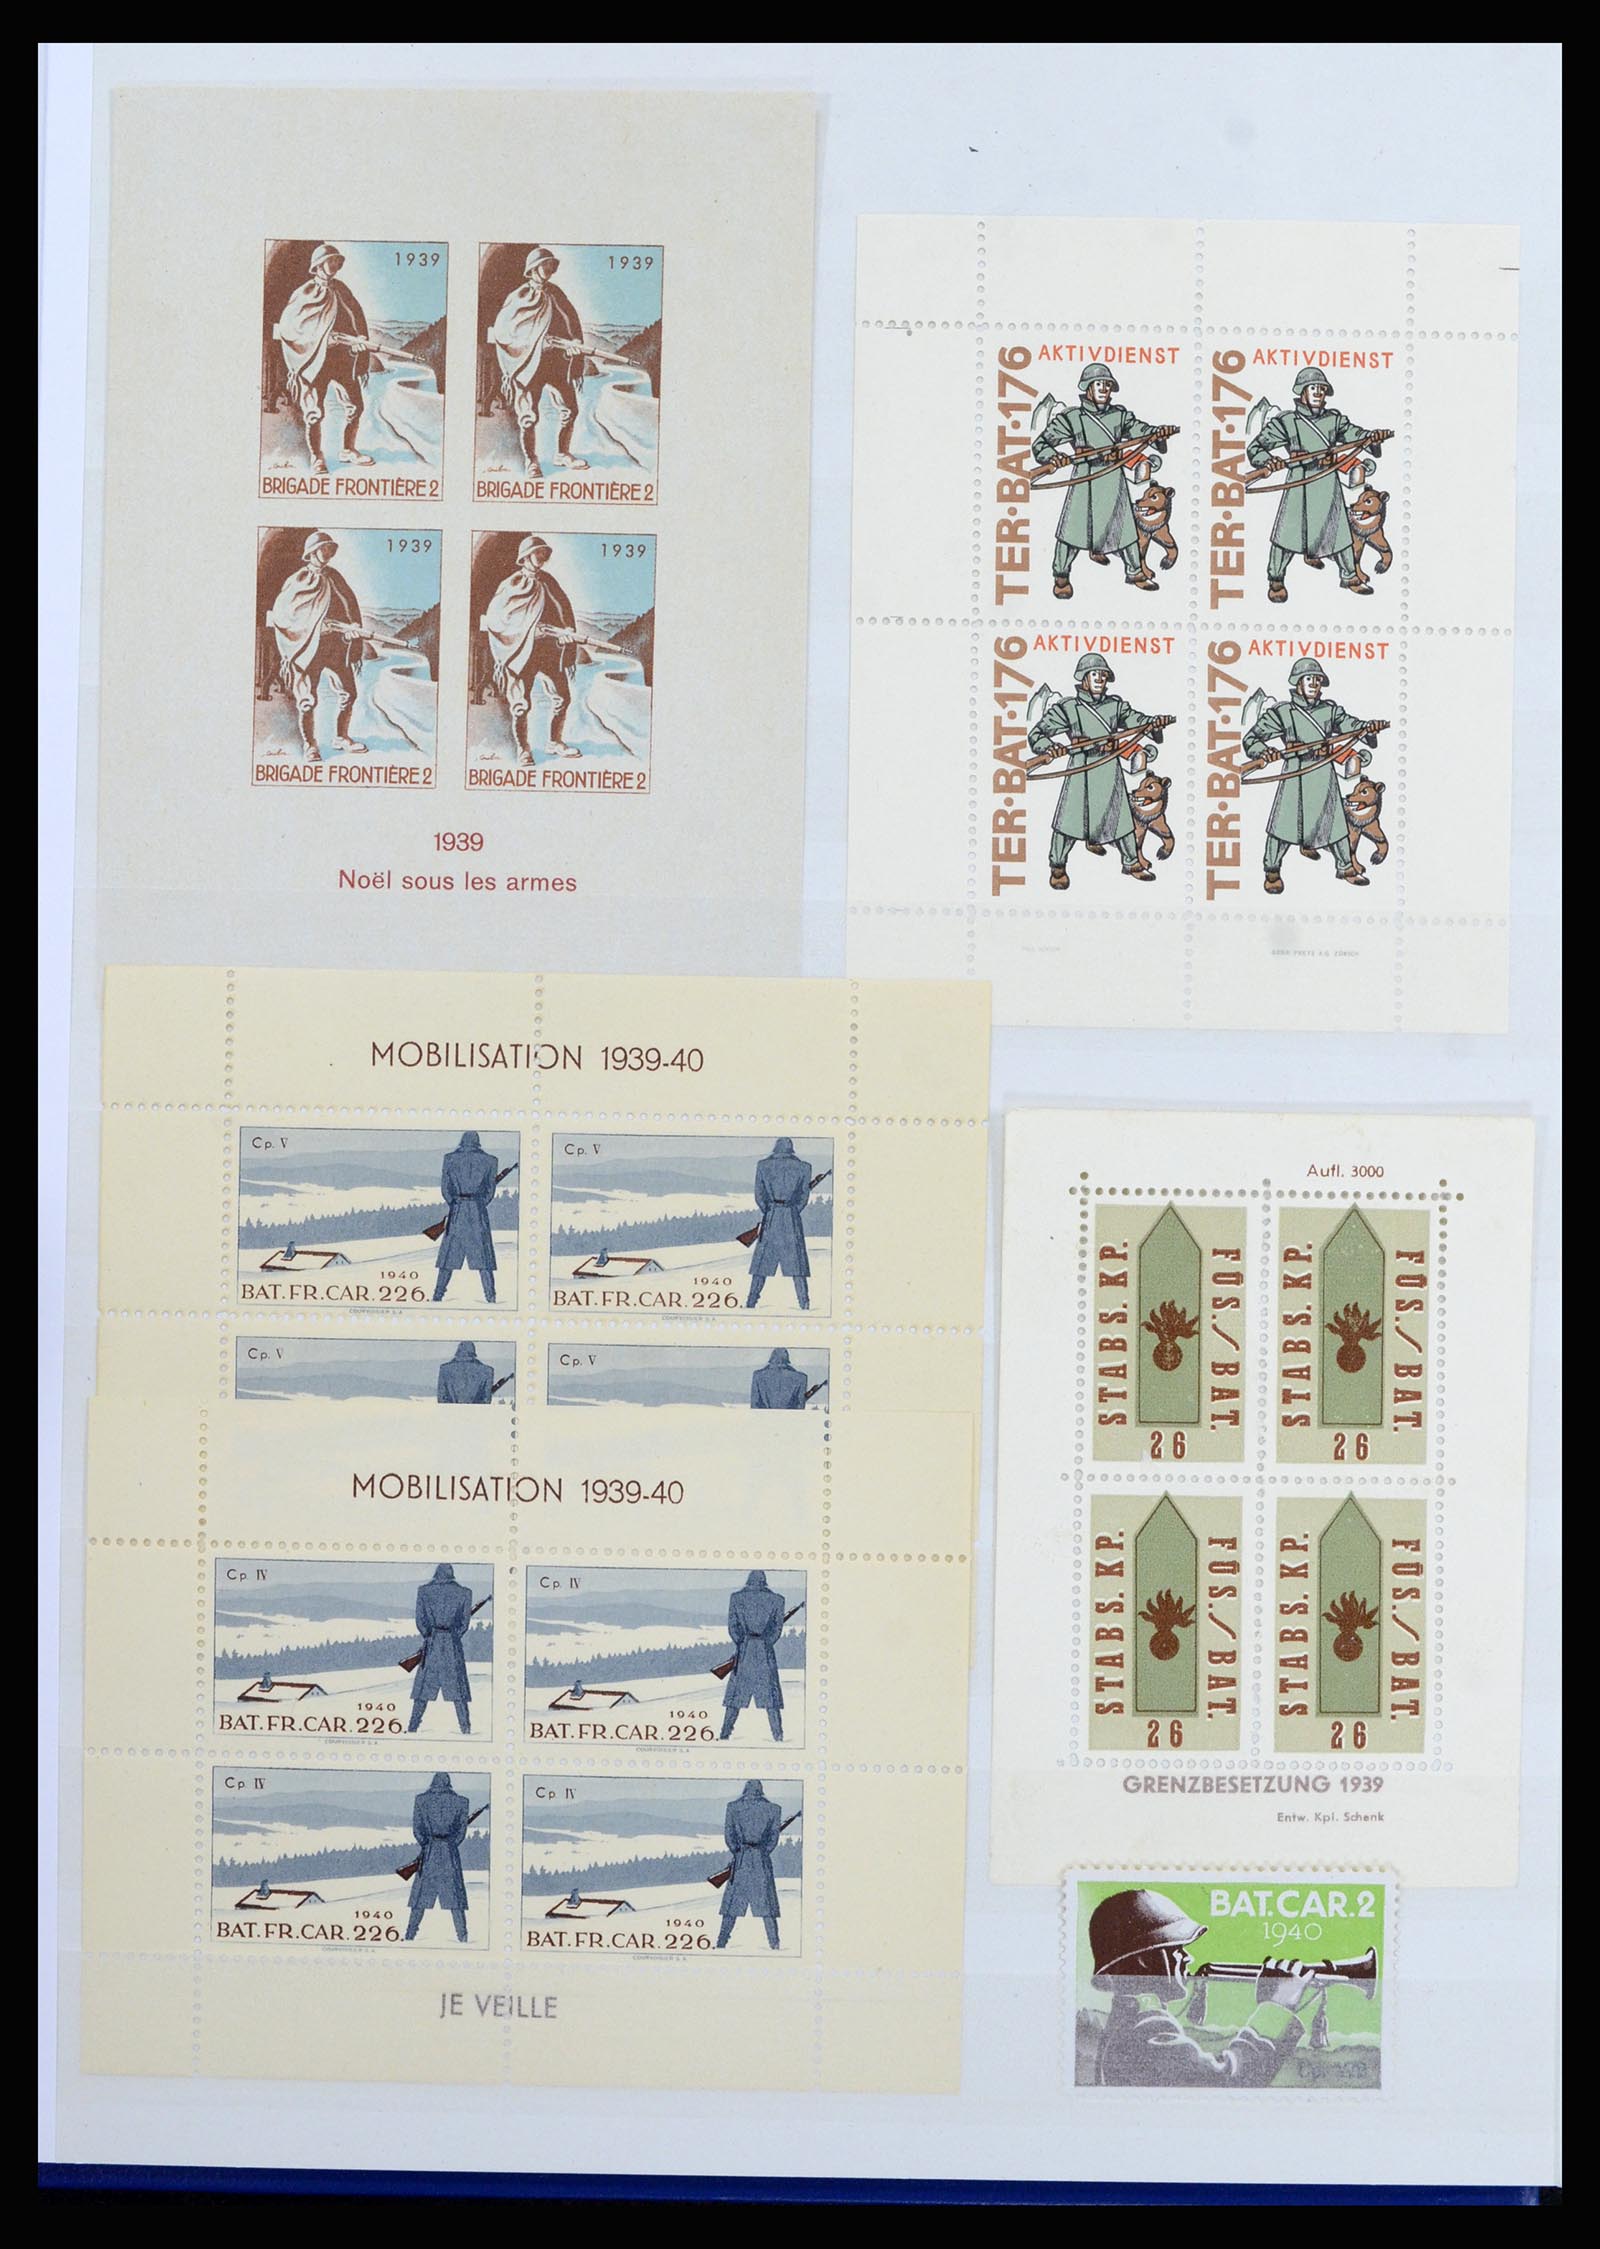 37149 004 - Stamp collection 37149 Switzerland soldier stamps 1914-1945.